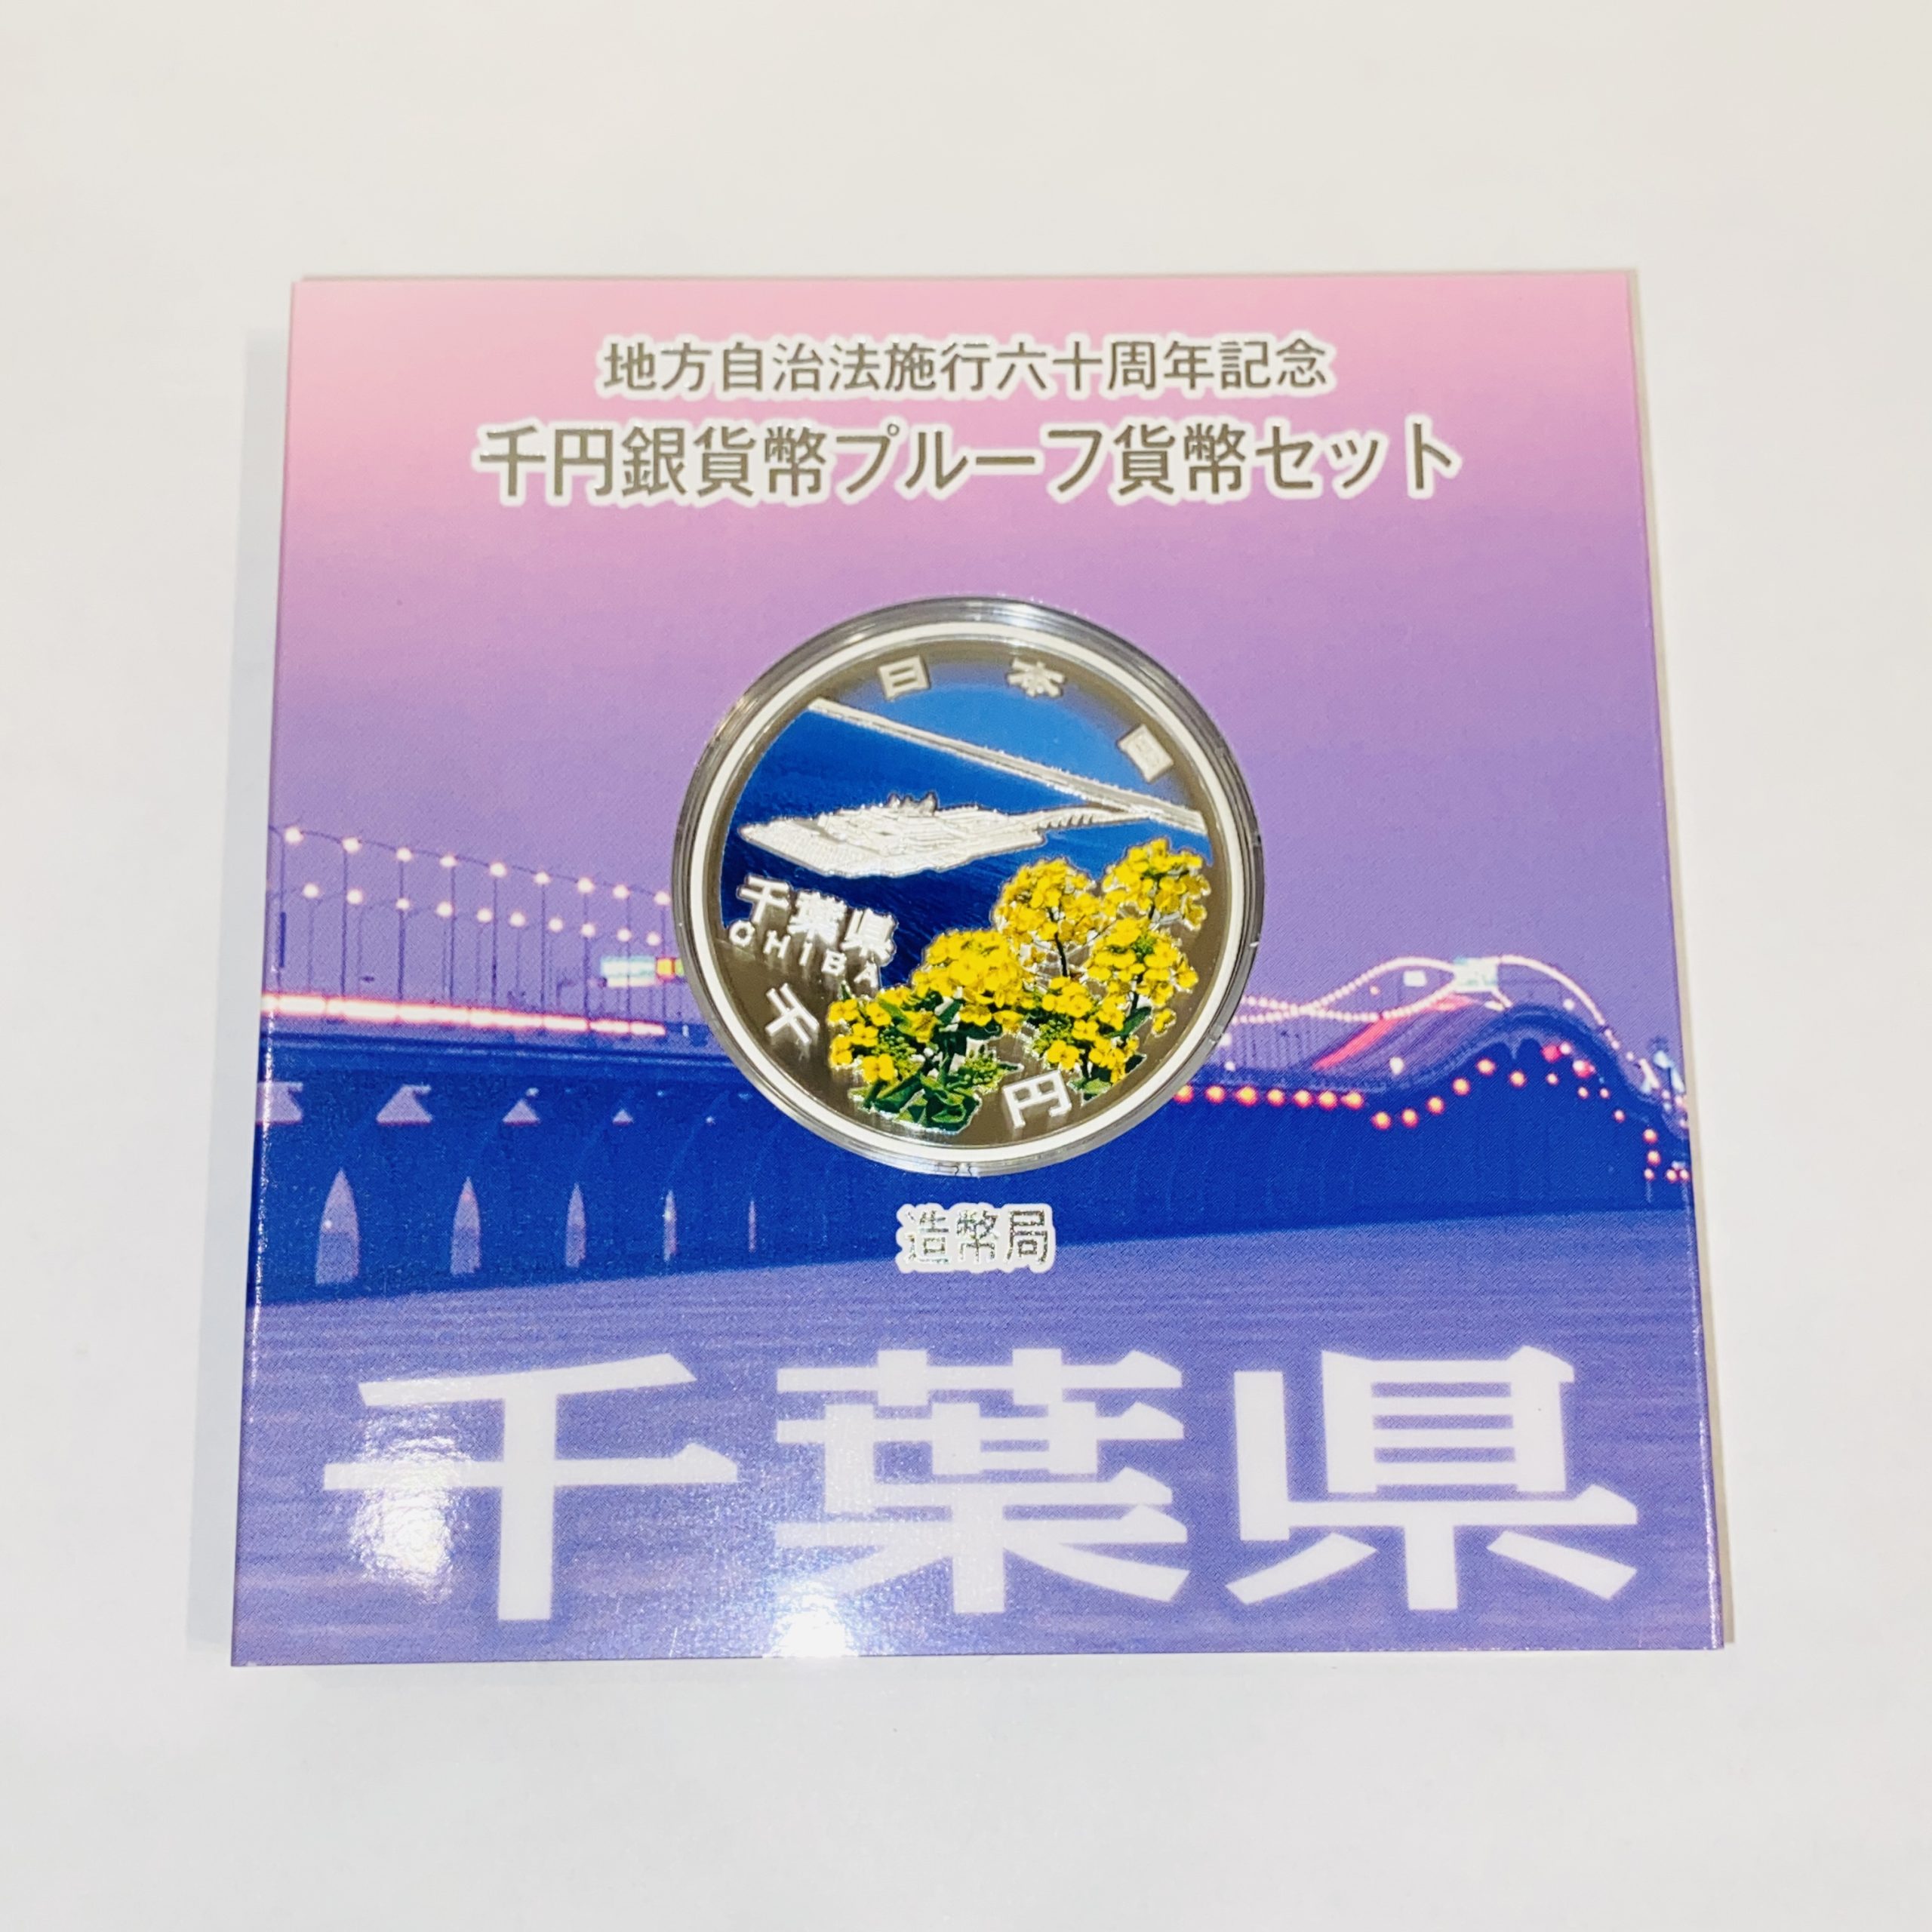 地方自治法施行六十周年記念 千円銀貨幣プルーフ貨幣セット 千葉県